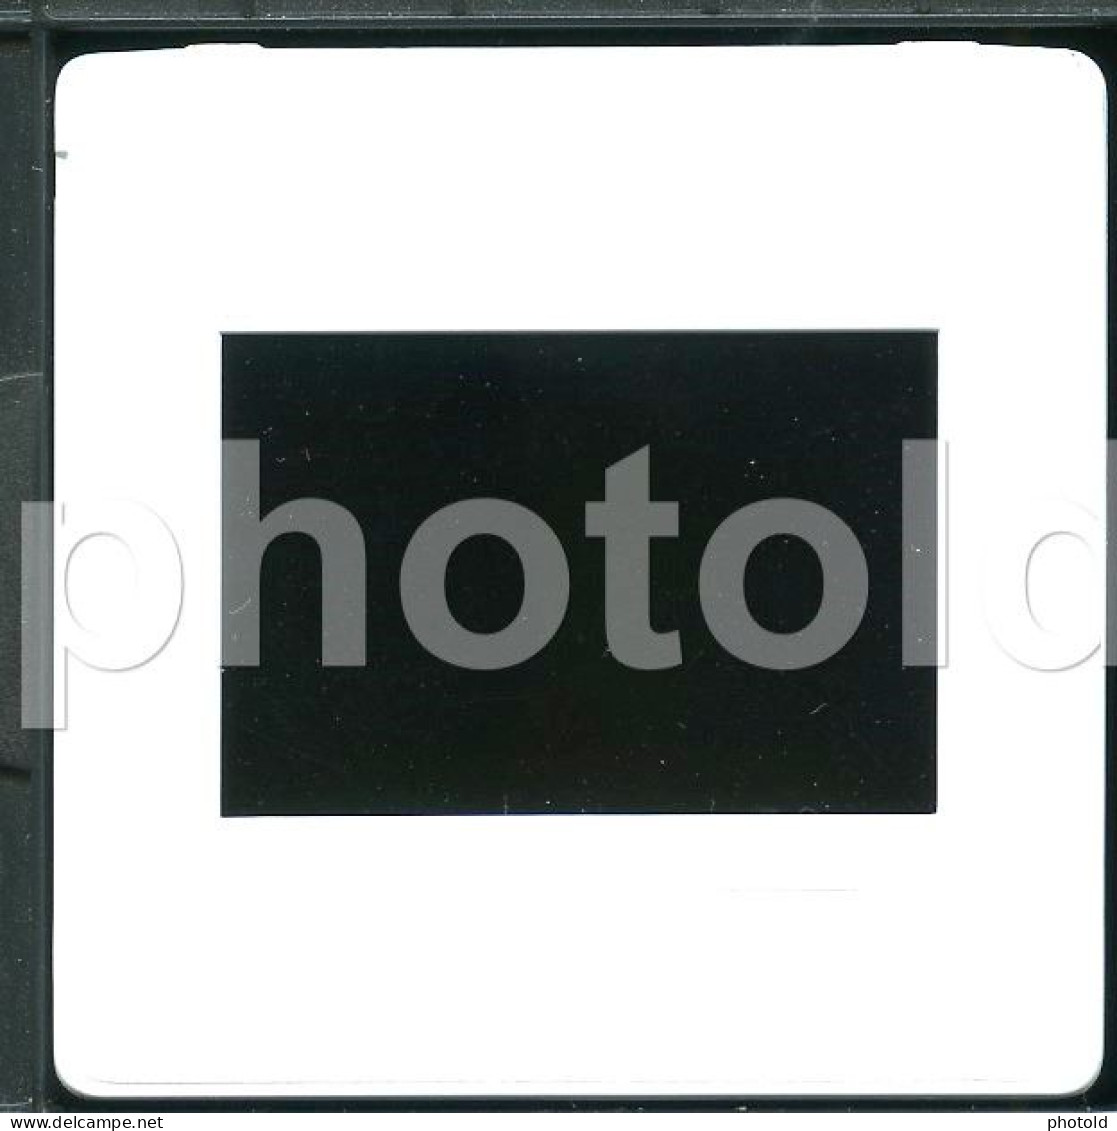 1984 FERRY CAMINHA MINHO PORTUGAL AMATEUR 35mm DIAPOSITIVE SLIDE Not PHOTO No FOTO NB3900 - Diapositive